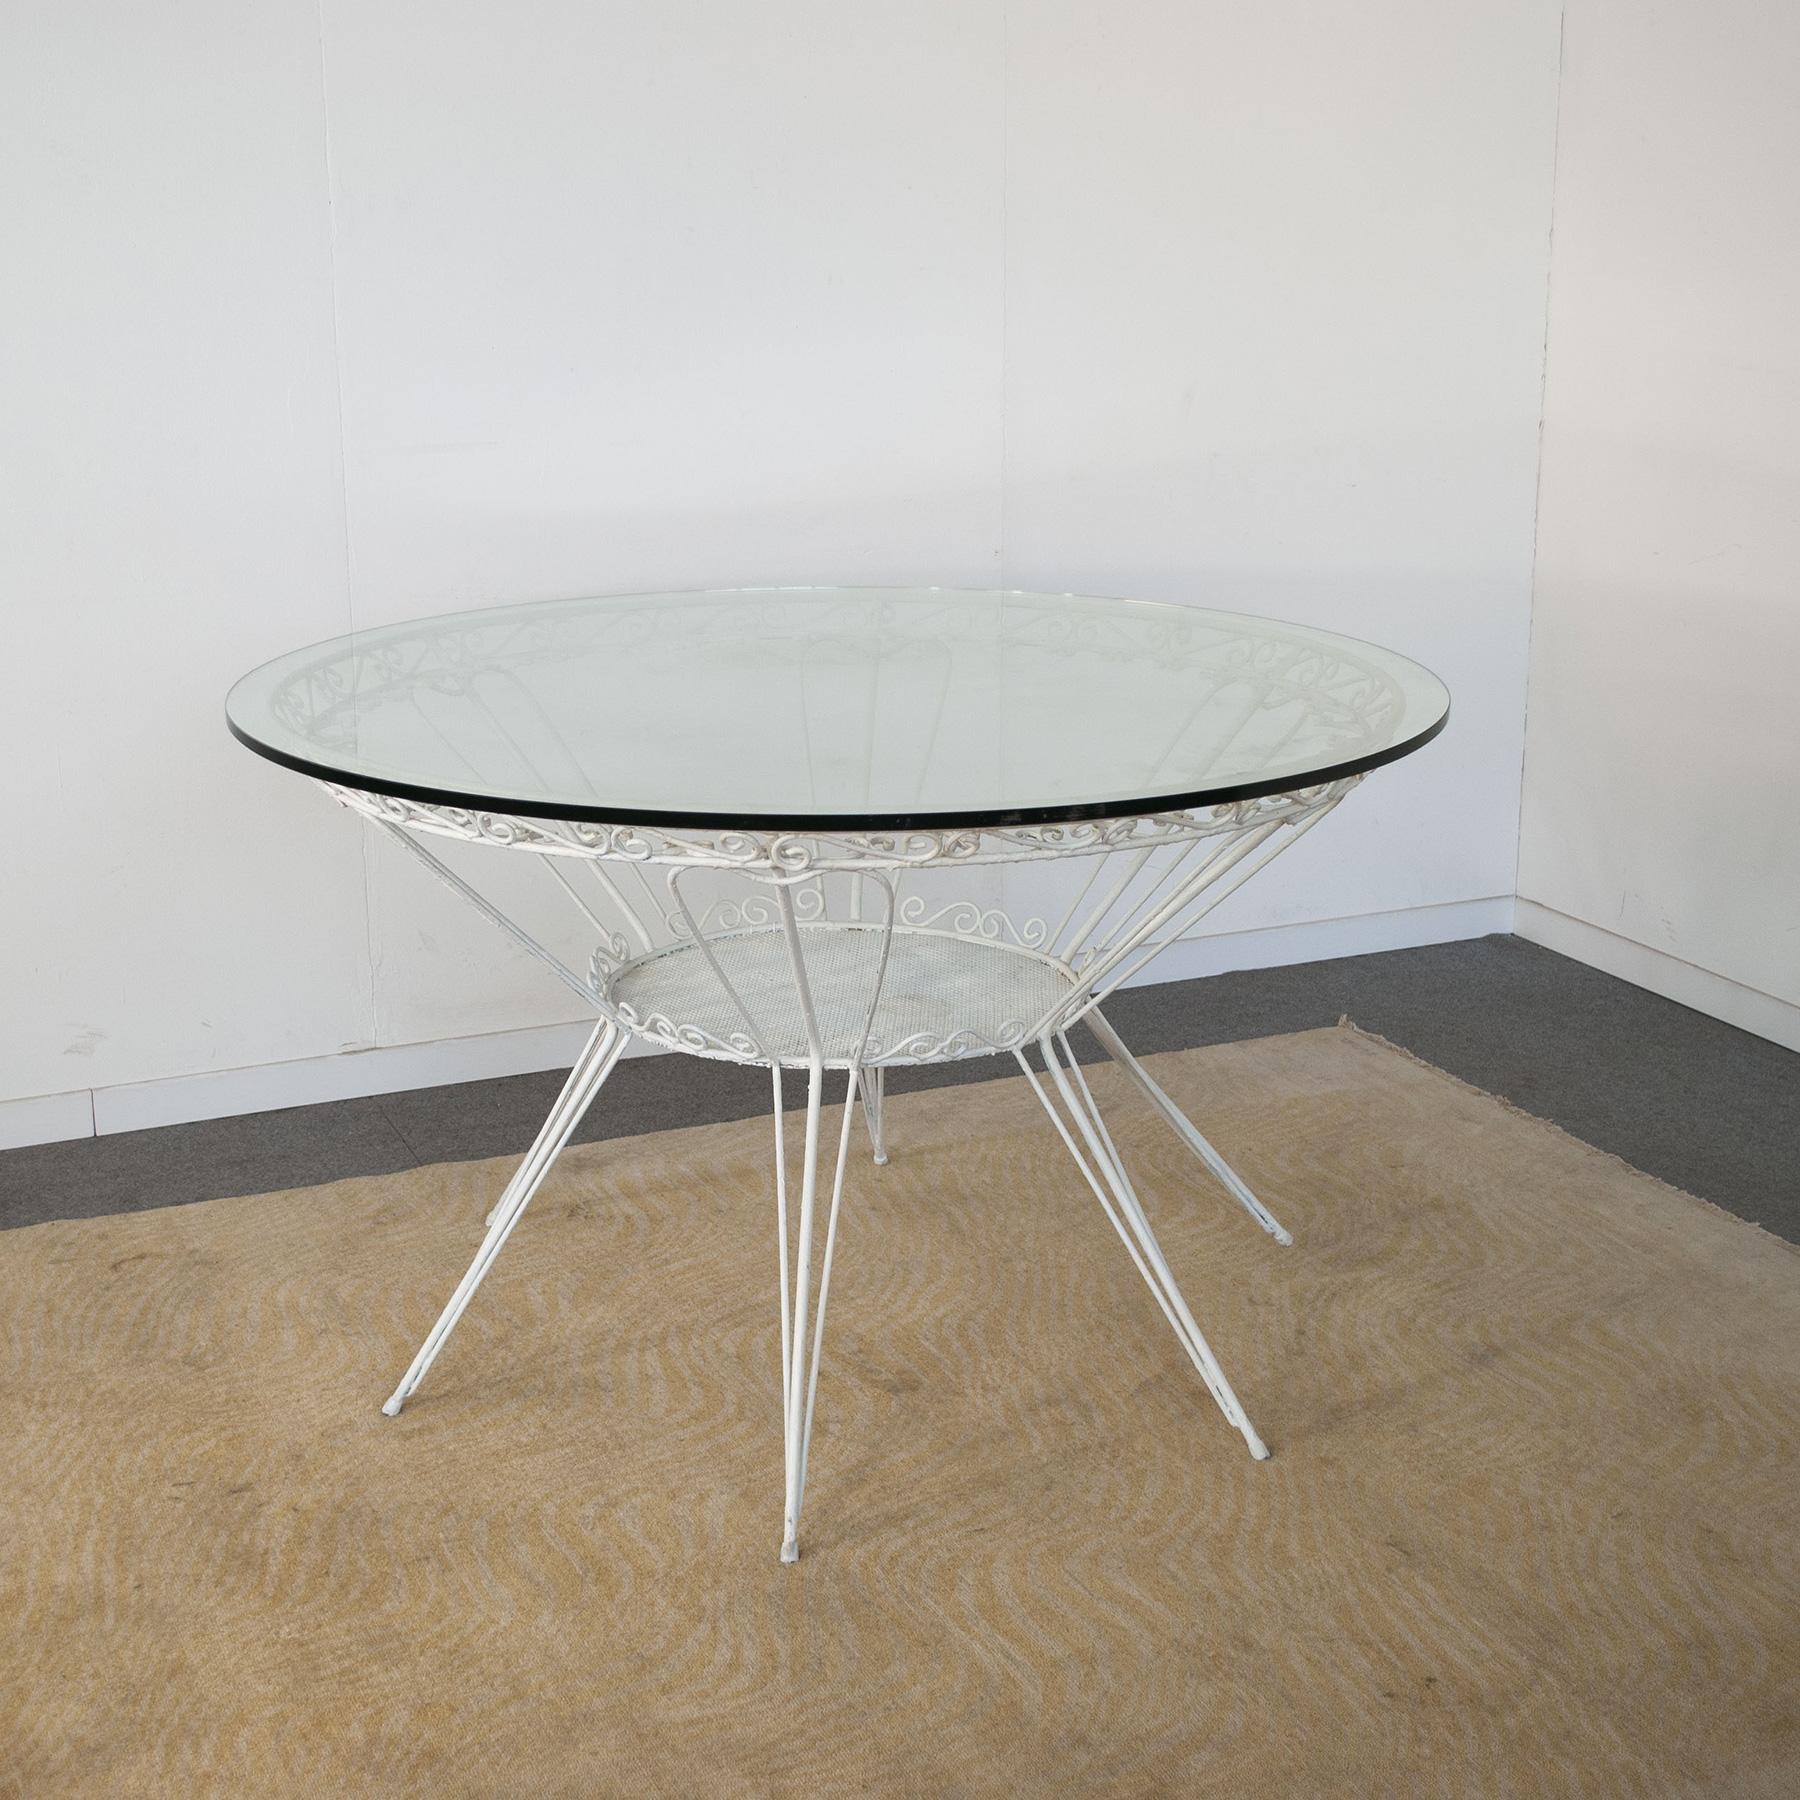 Mid-Century Modern Gio Ponti Style Wrought Iron Table from the 1950s Casa E Giardino For Sale